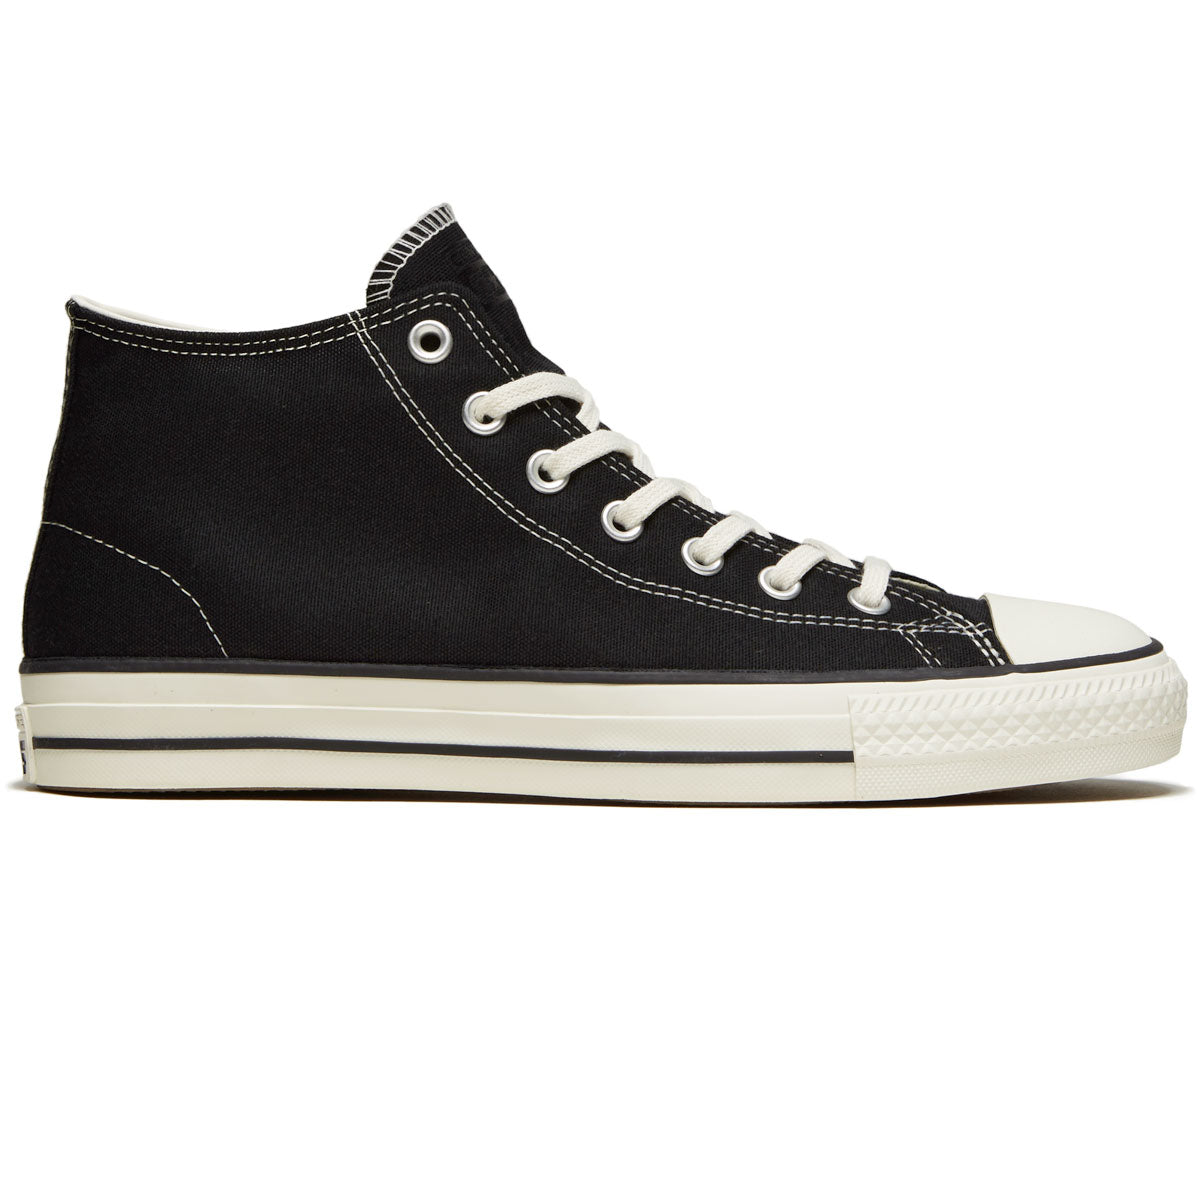 Converse Chuck Taylor All Star Pro Mid Shoes - Black/Black/Egret image 1